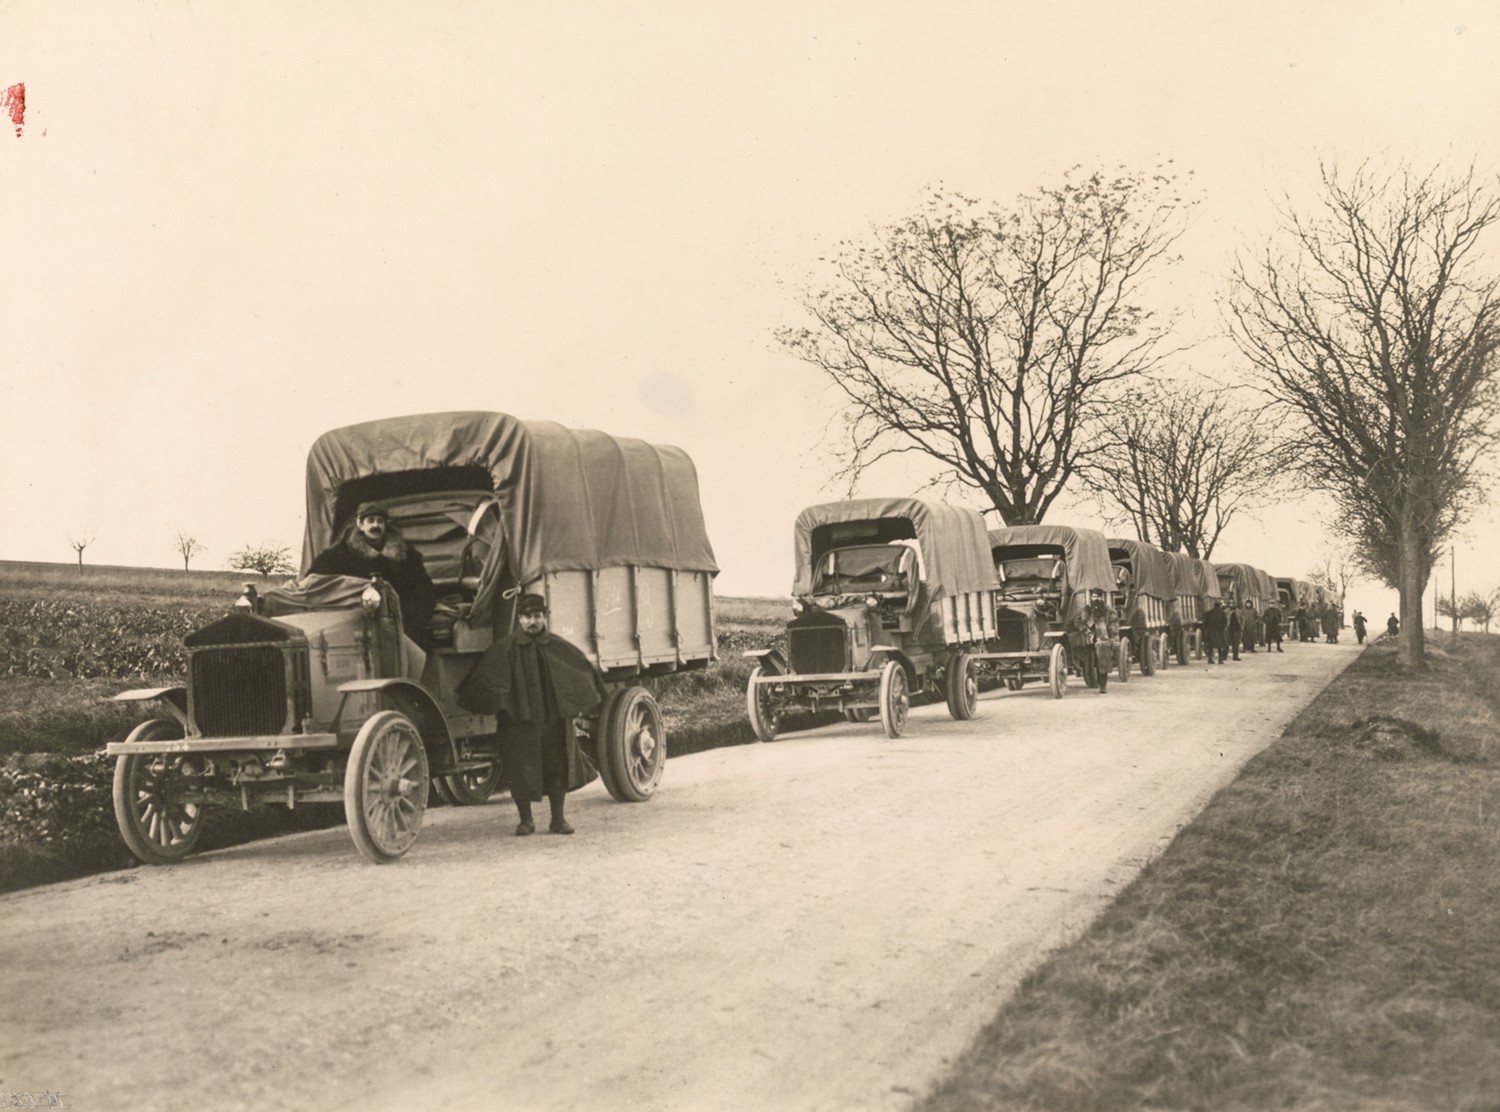 Pierce Arrow Factory Complex, Buffalo New York Convoy of Pierce-Arrow trucks somewhere in France (1918)